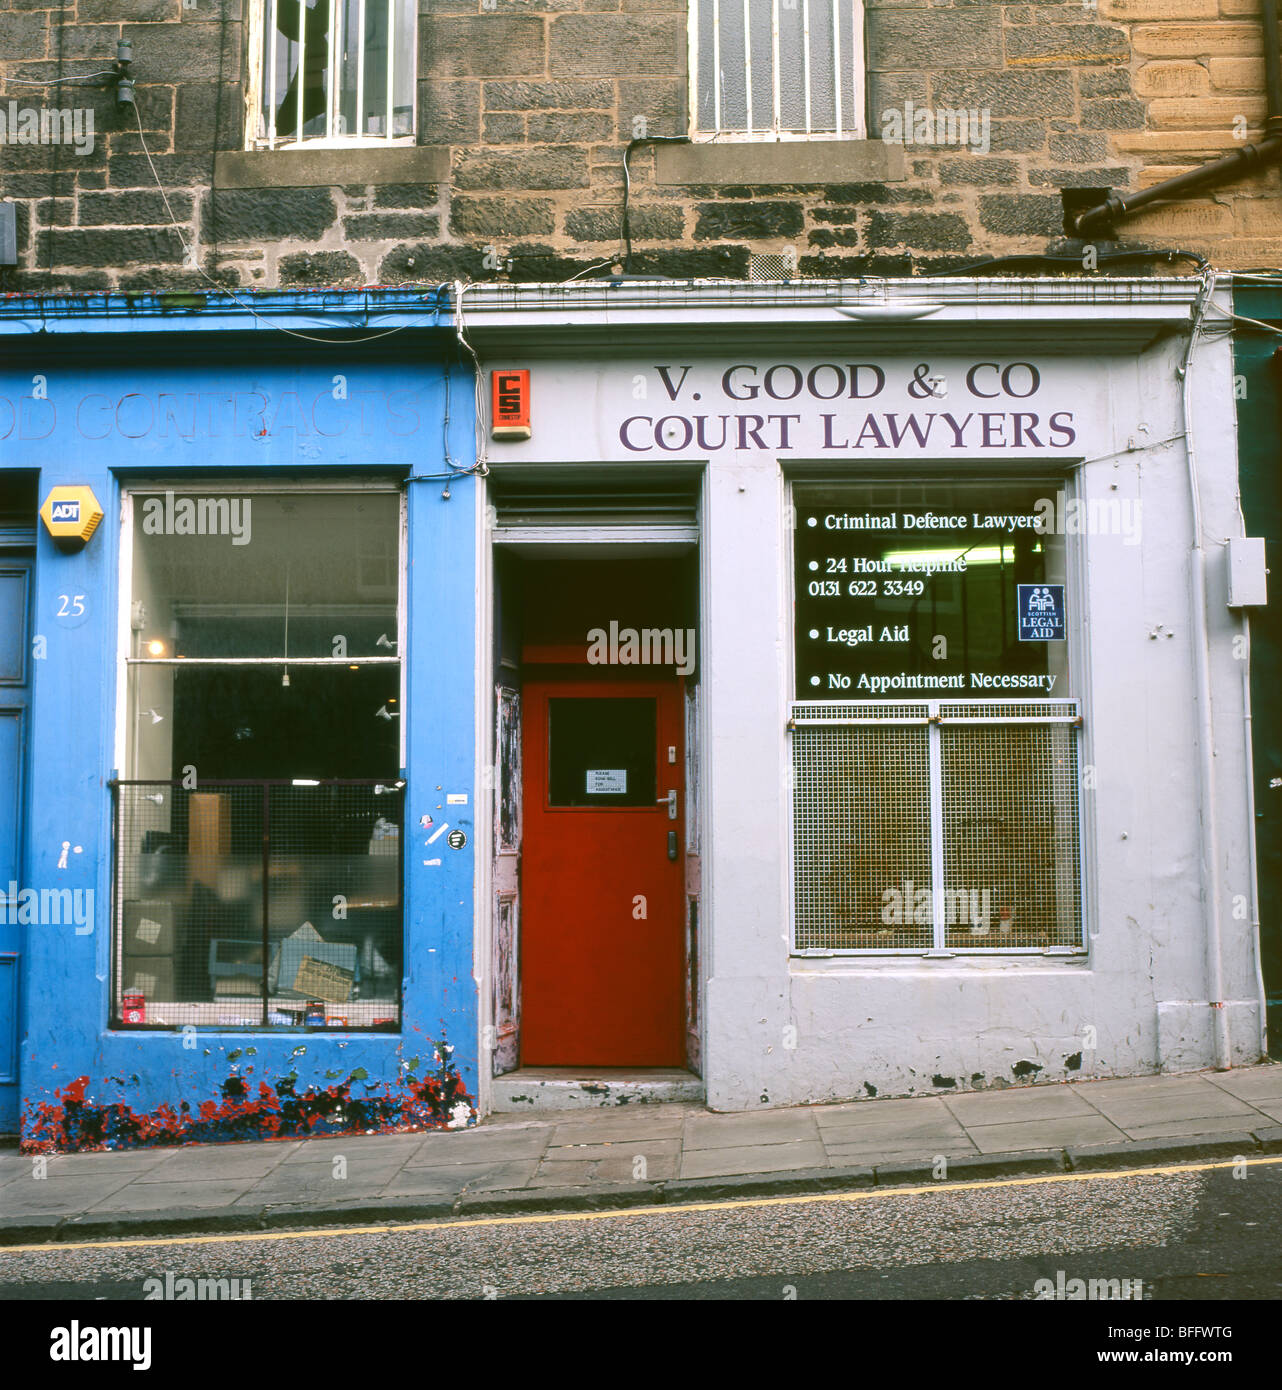 V. Good & Co Court Criminal Defence Lawyers shop in Candlemaker Row, Edinburgh Scotland Great Britain UK   KATHY DEWITT Stock Photo